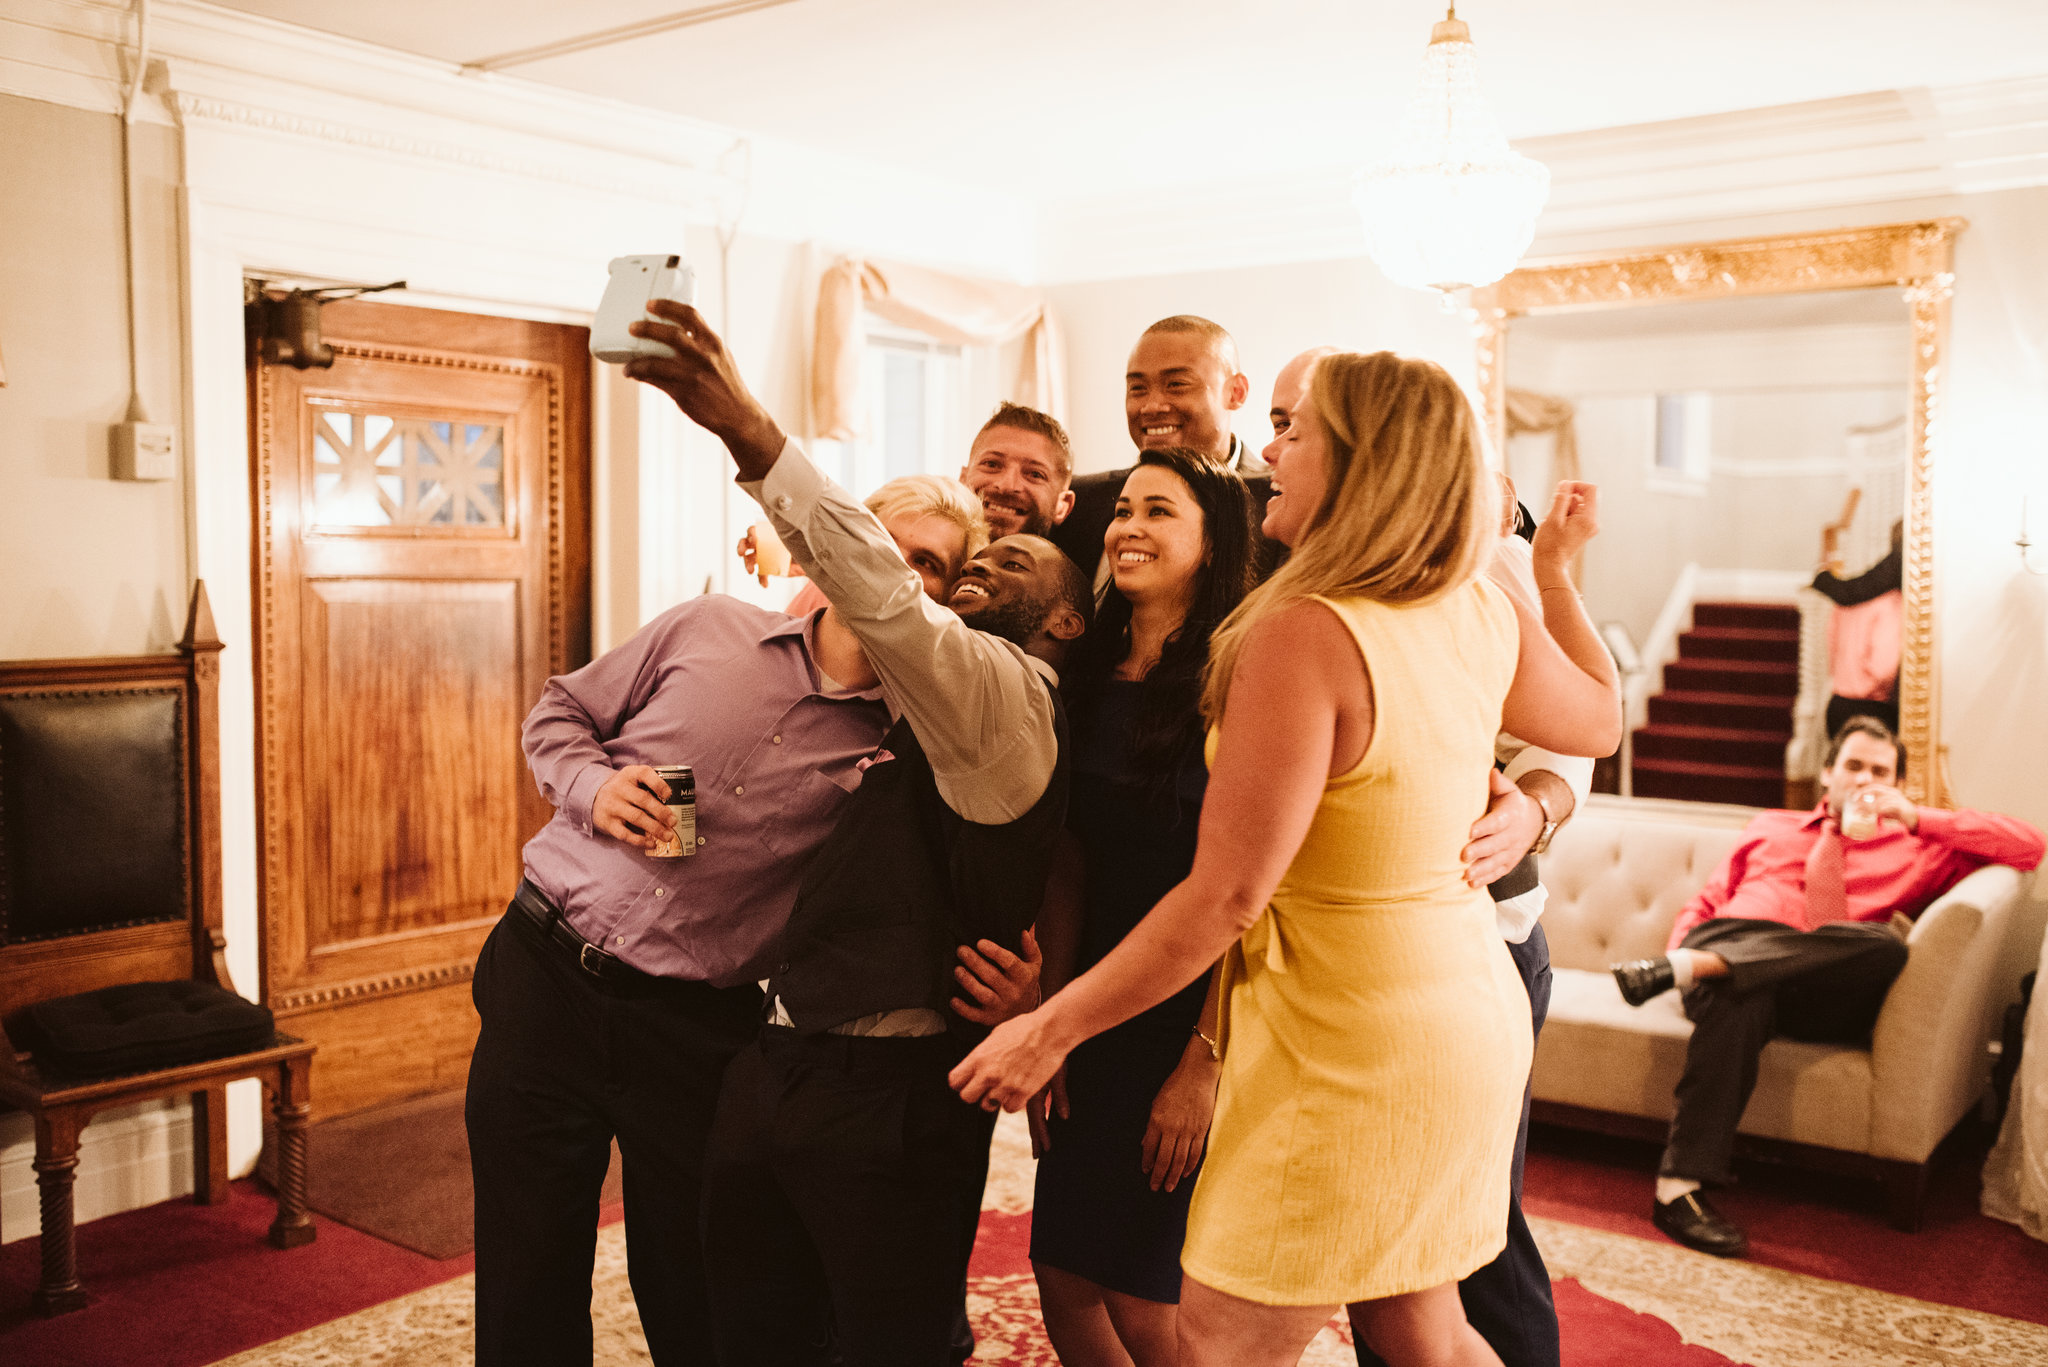  Ellicott City, Baltimore Wedding Photographer, Wayside Inn, Summer Wedding, Romantic, Traditional, Guests Taking Selfies at Reception 